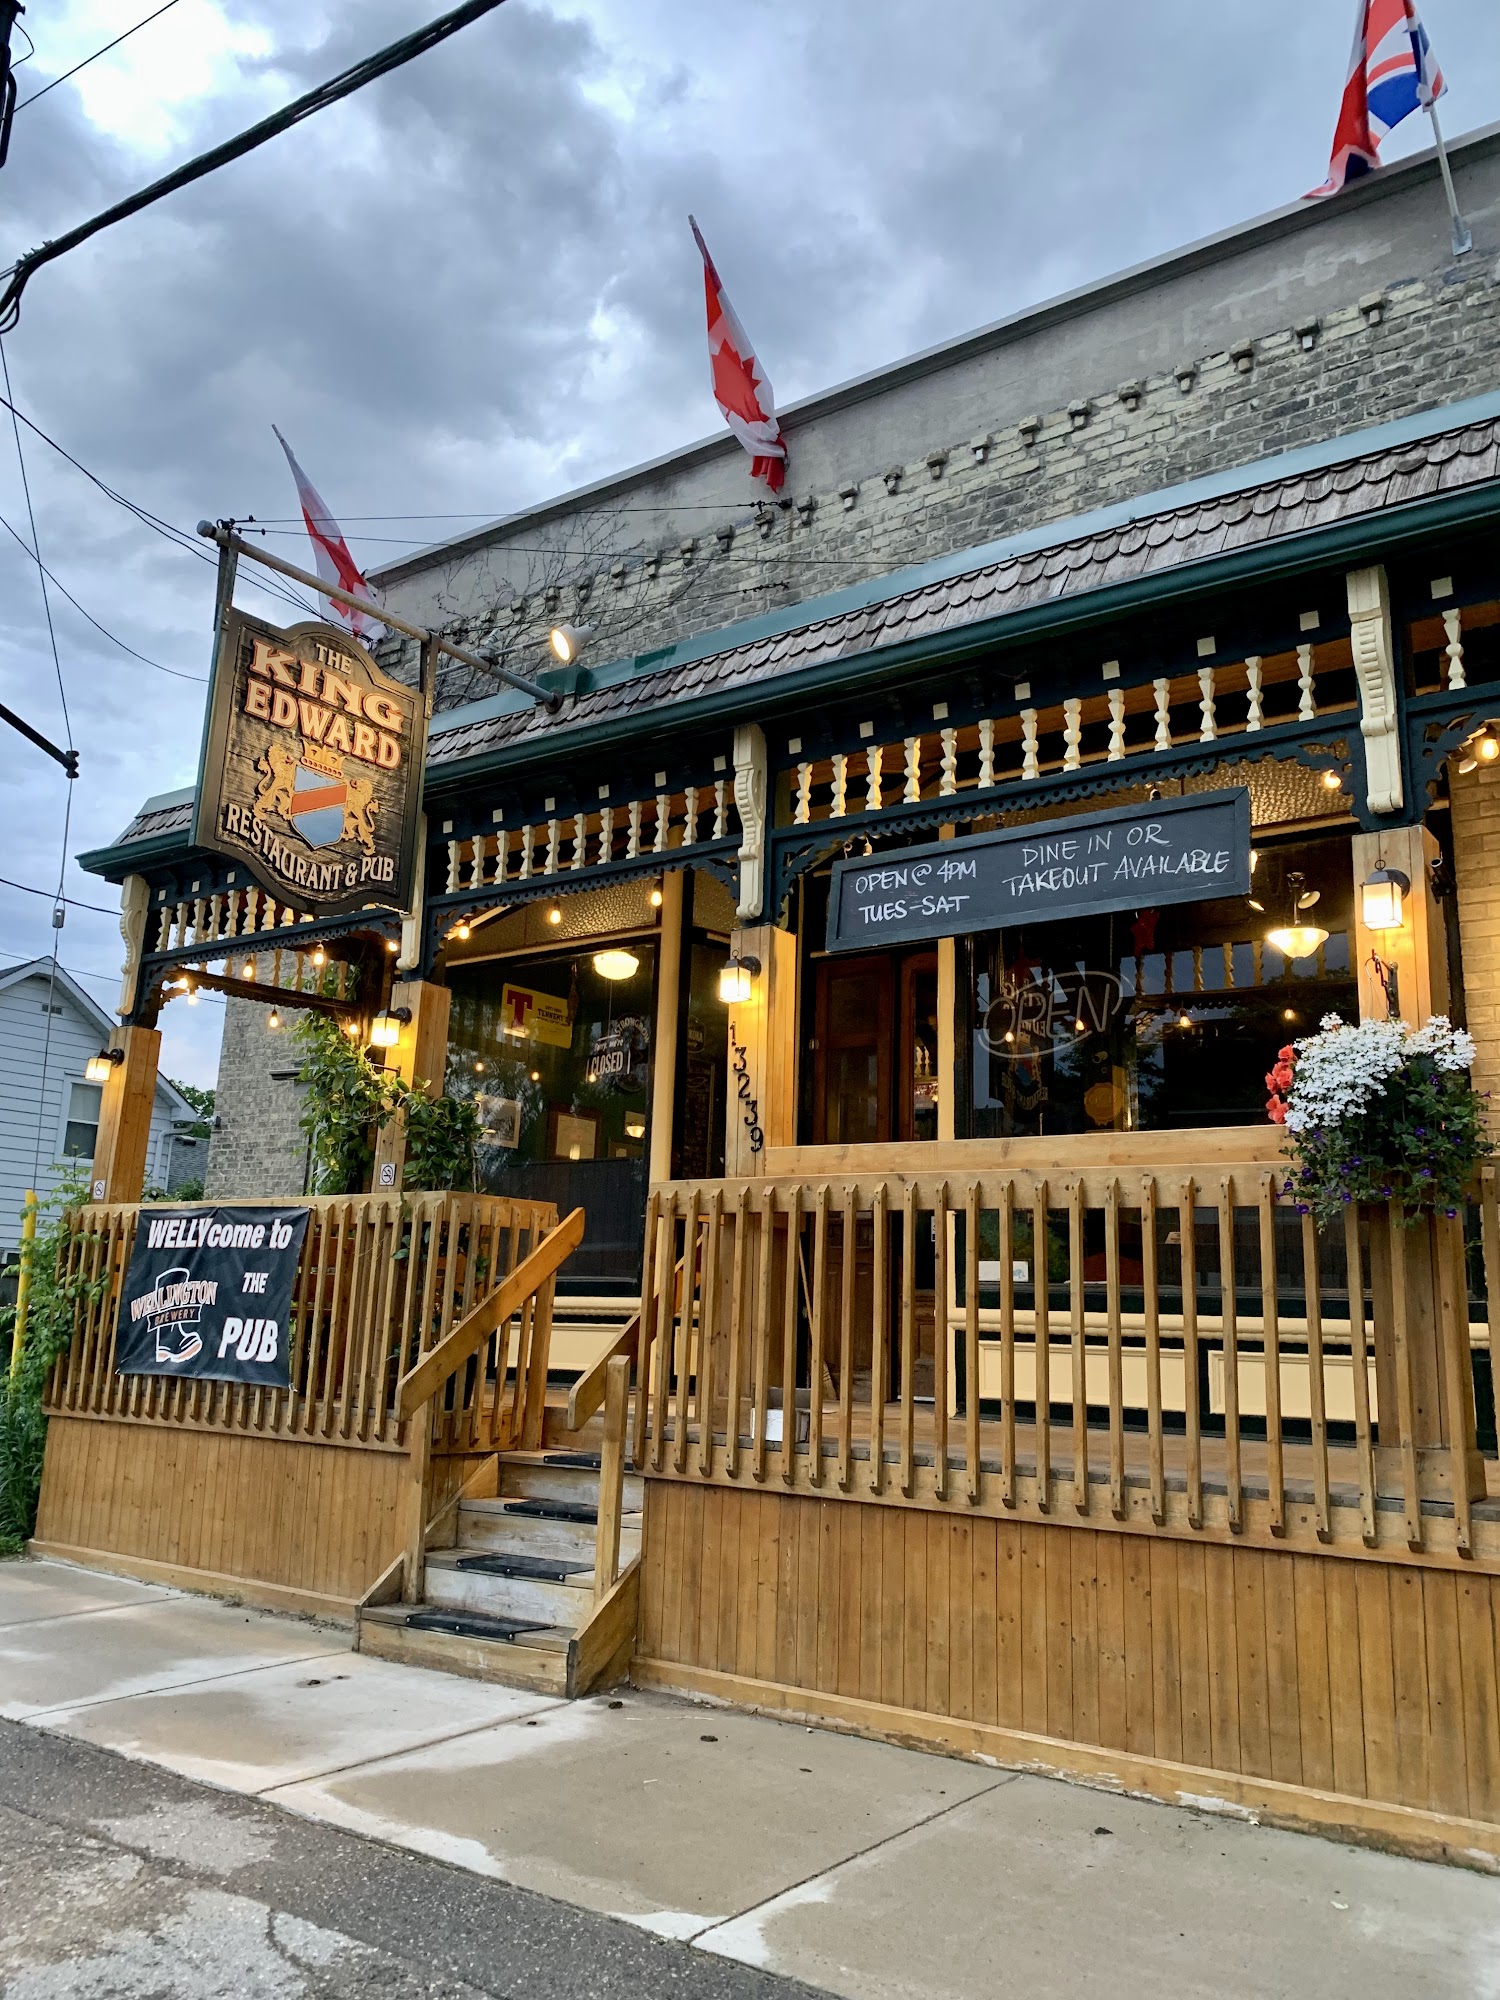 The King Edward Restaurant & Pub